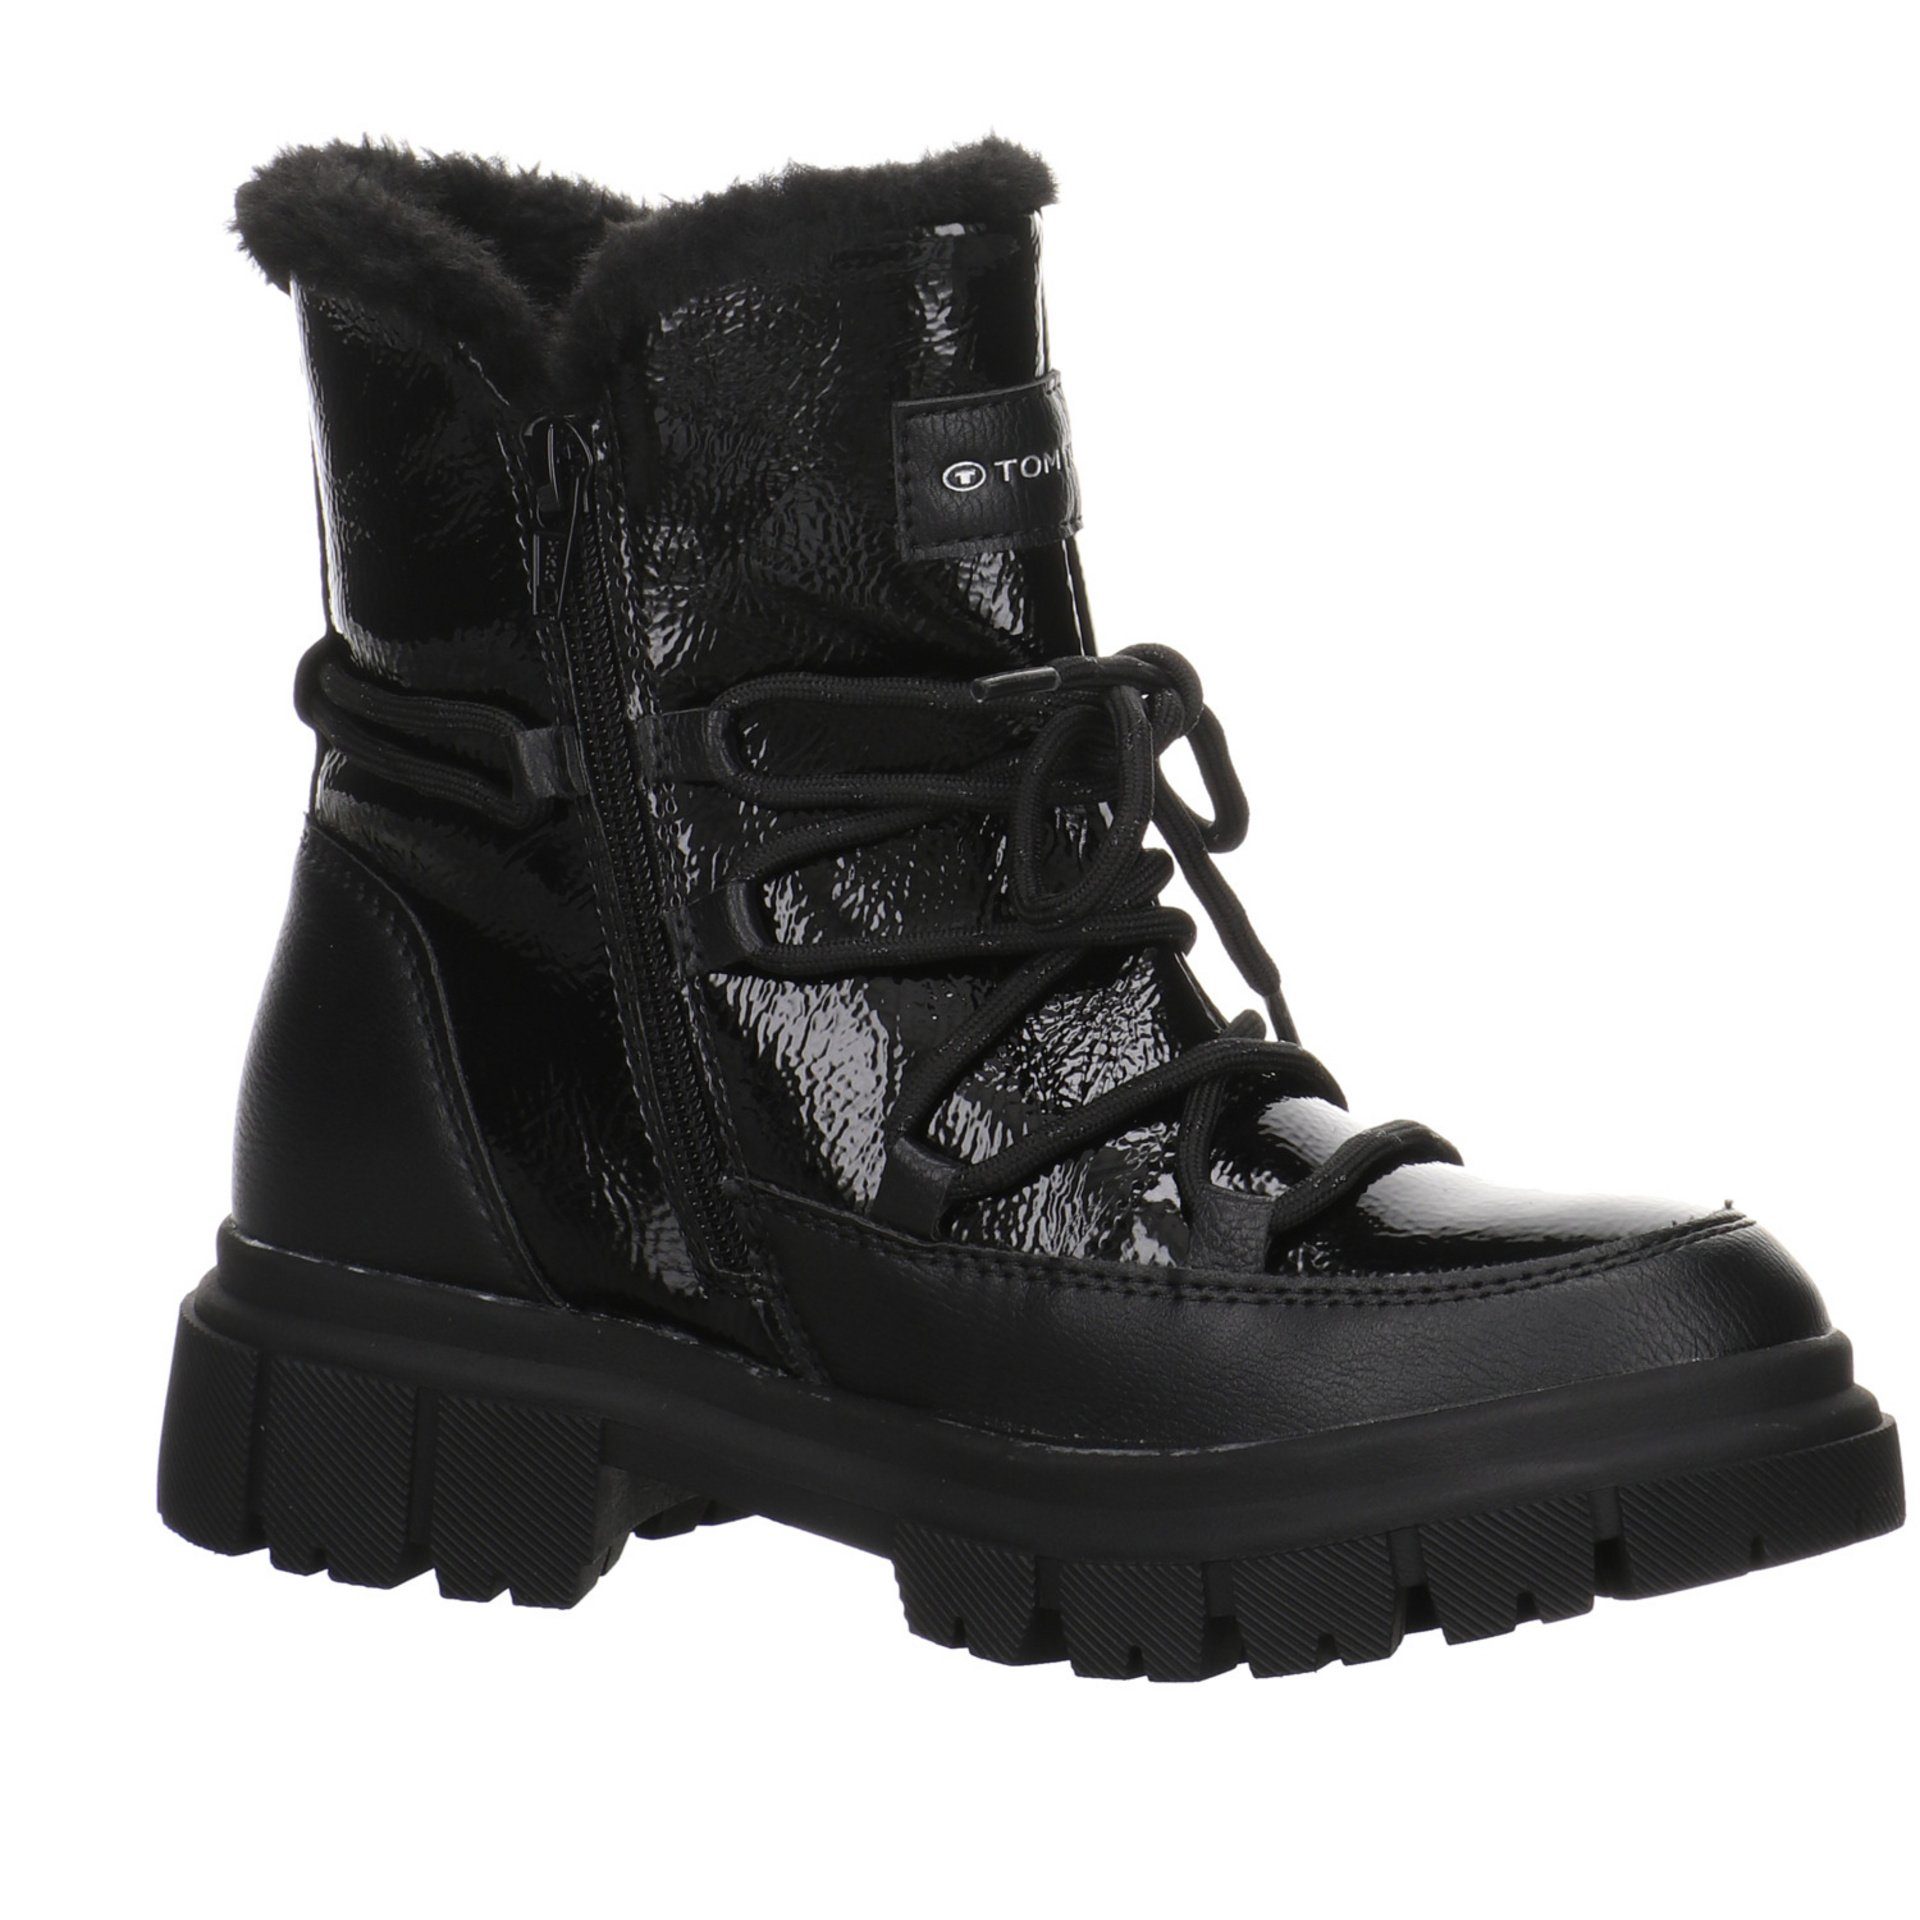 TOM TAILOR Kinderschuhe black Mädchen Stiefel Schuhe Stiefelette Boots Synthetikkombination